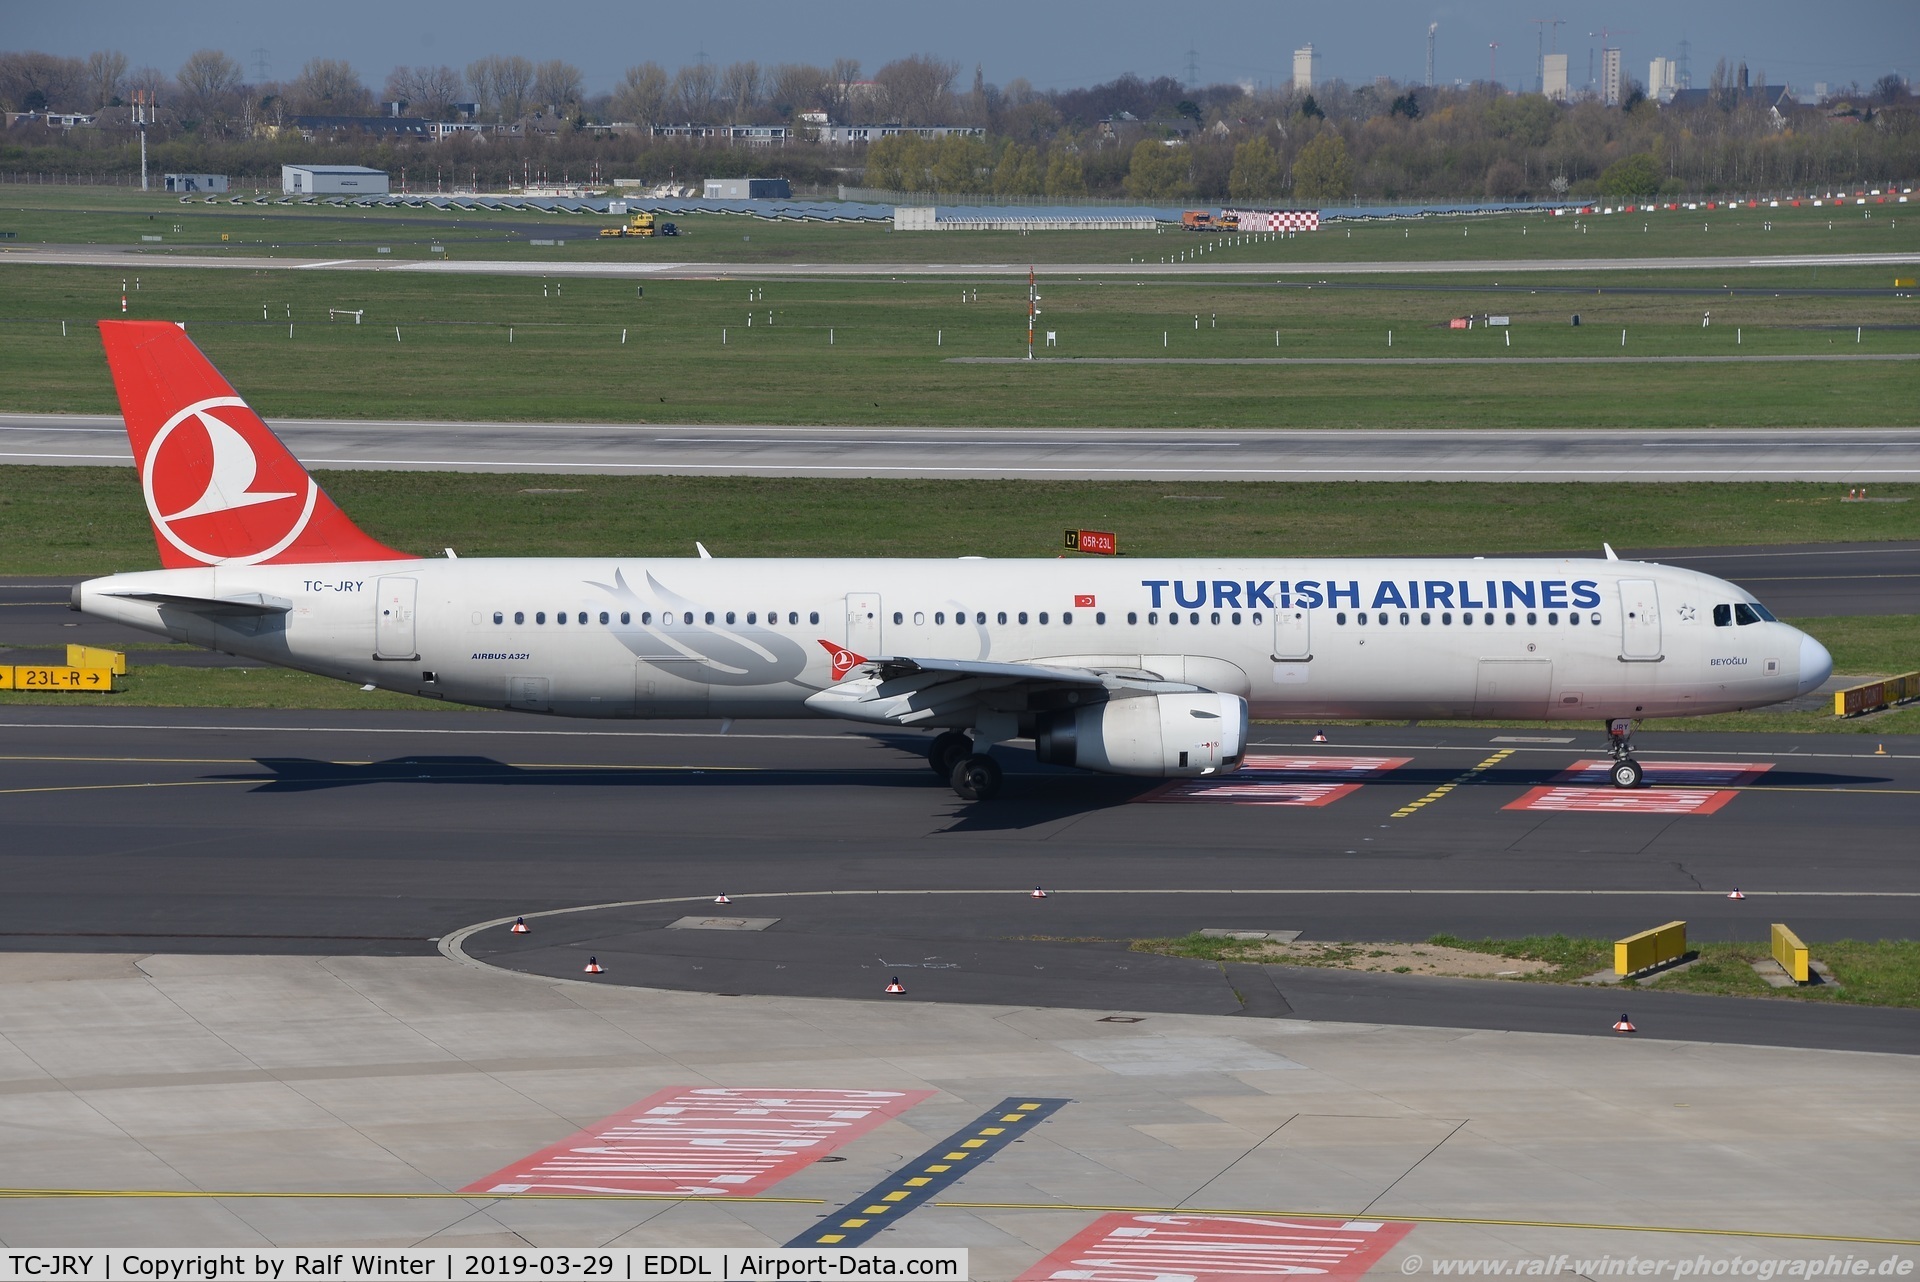 TC-JRY, 2012 Airbus A321-231 C/N 5083, Airbus A321-231 - TK THY THY Turkish Airlines 'Beyo?lu' - 5083 - TC-JRY - 29.03.2019 - DUS